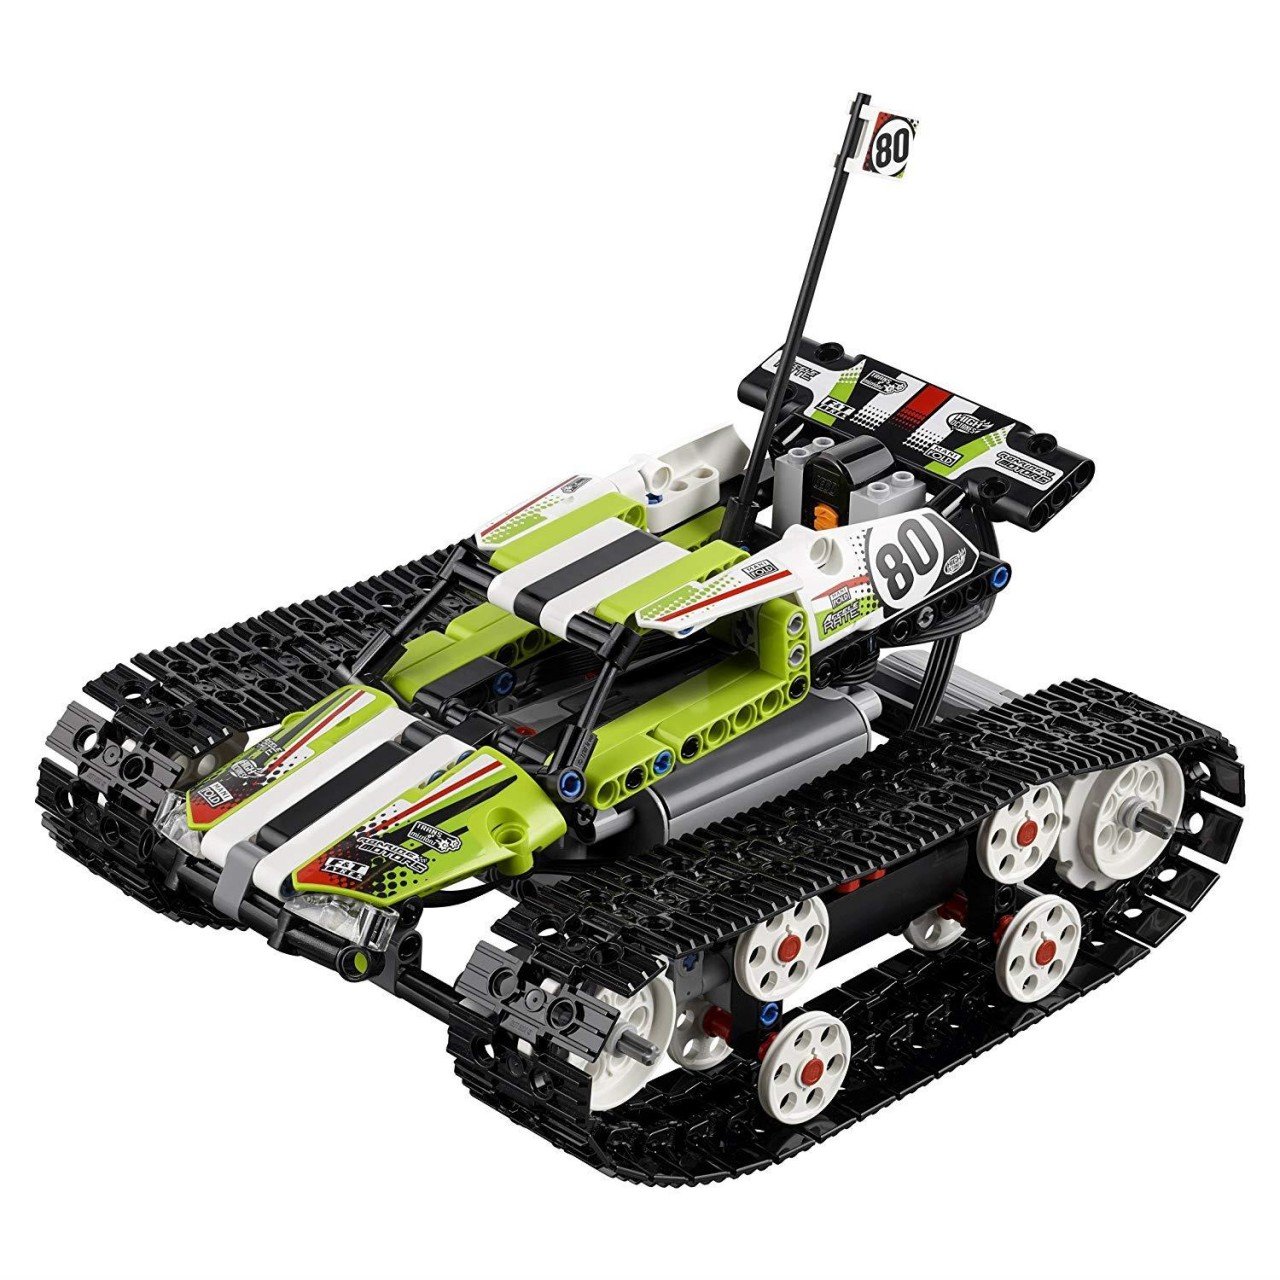 LEGO TECHNIC 42065 Ferngesteuerter Tracked Racer